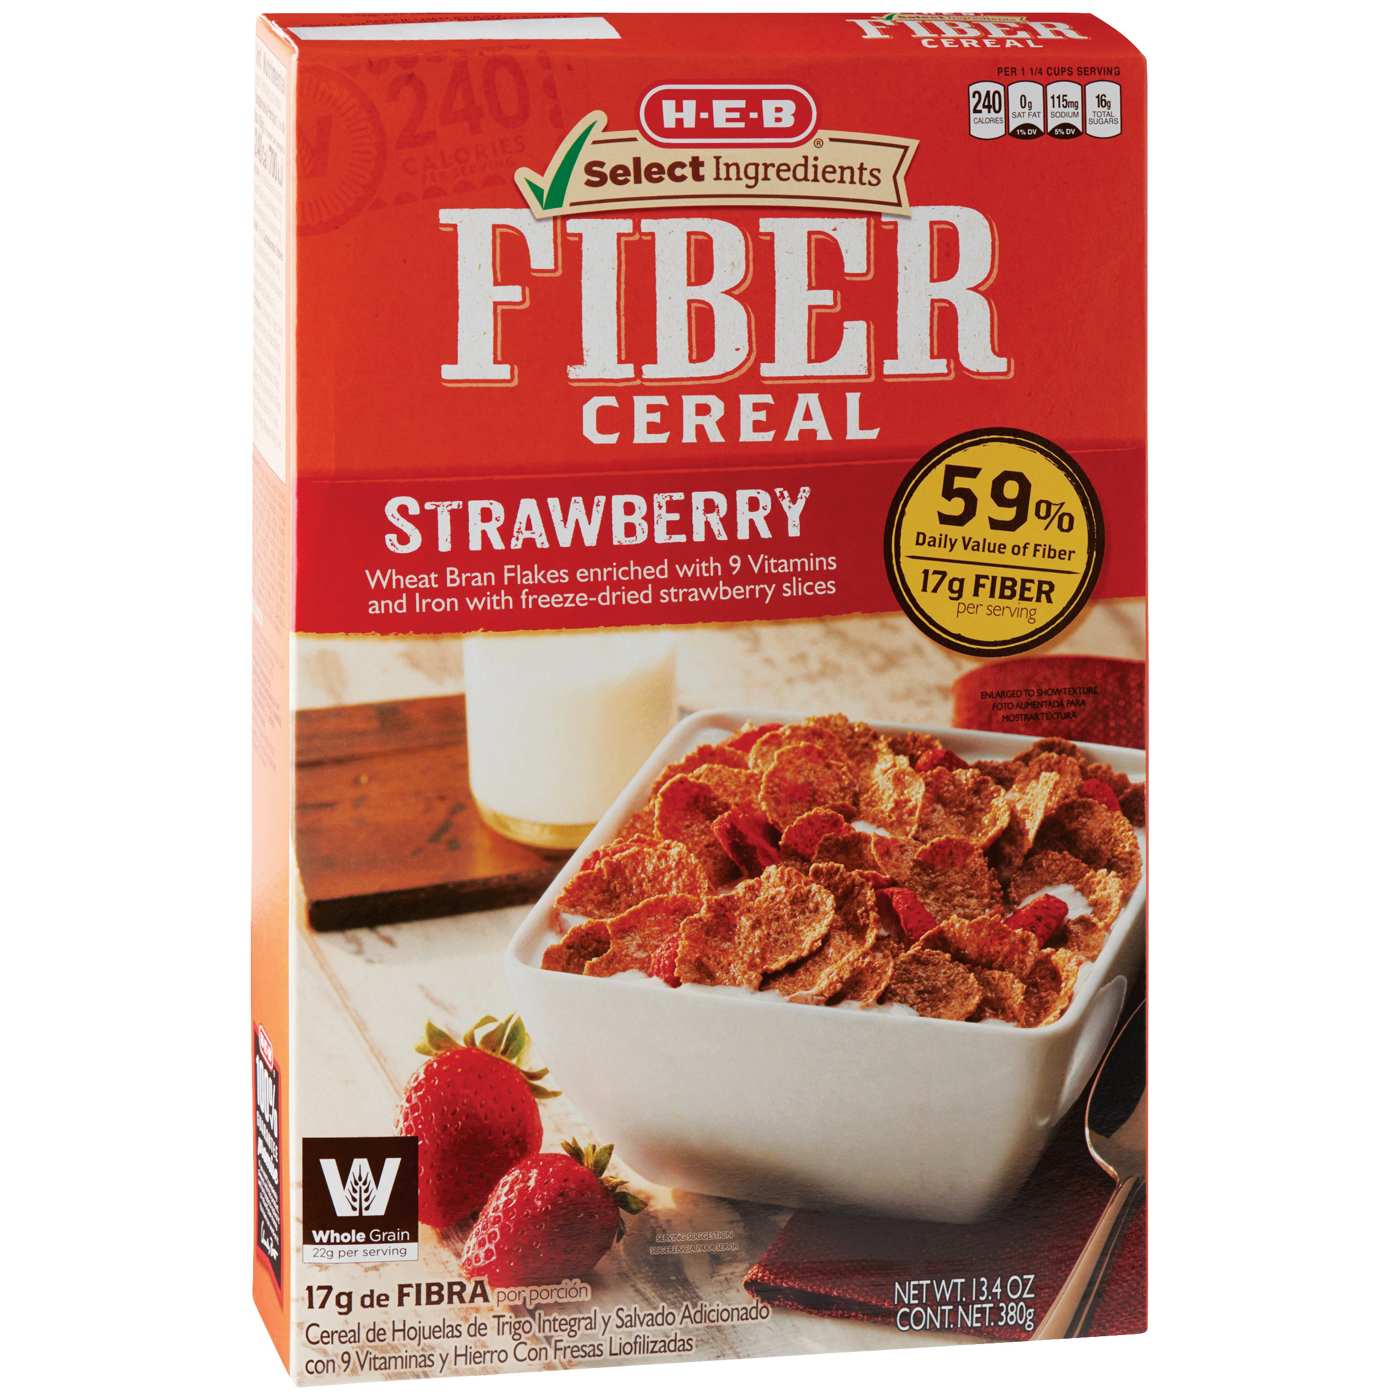 H-E-B Wheat Bran Flakes Fiber Cereal - Strawberry; image 1 of 2